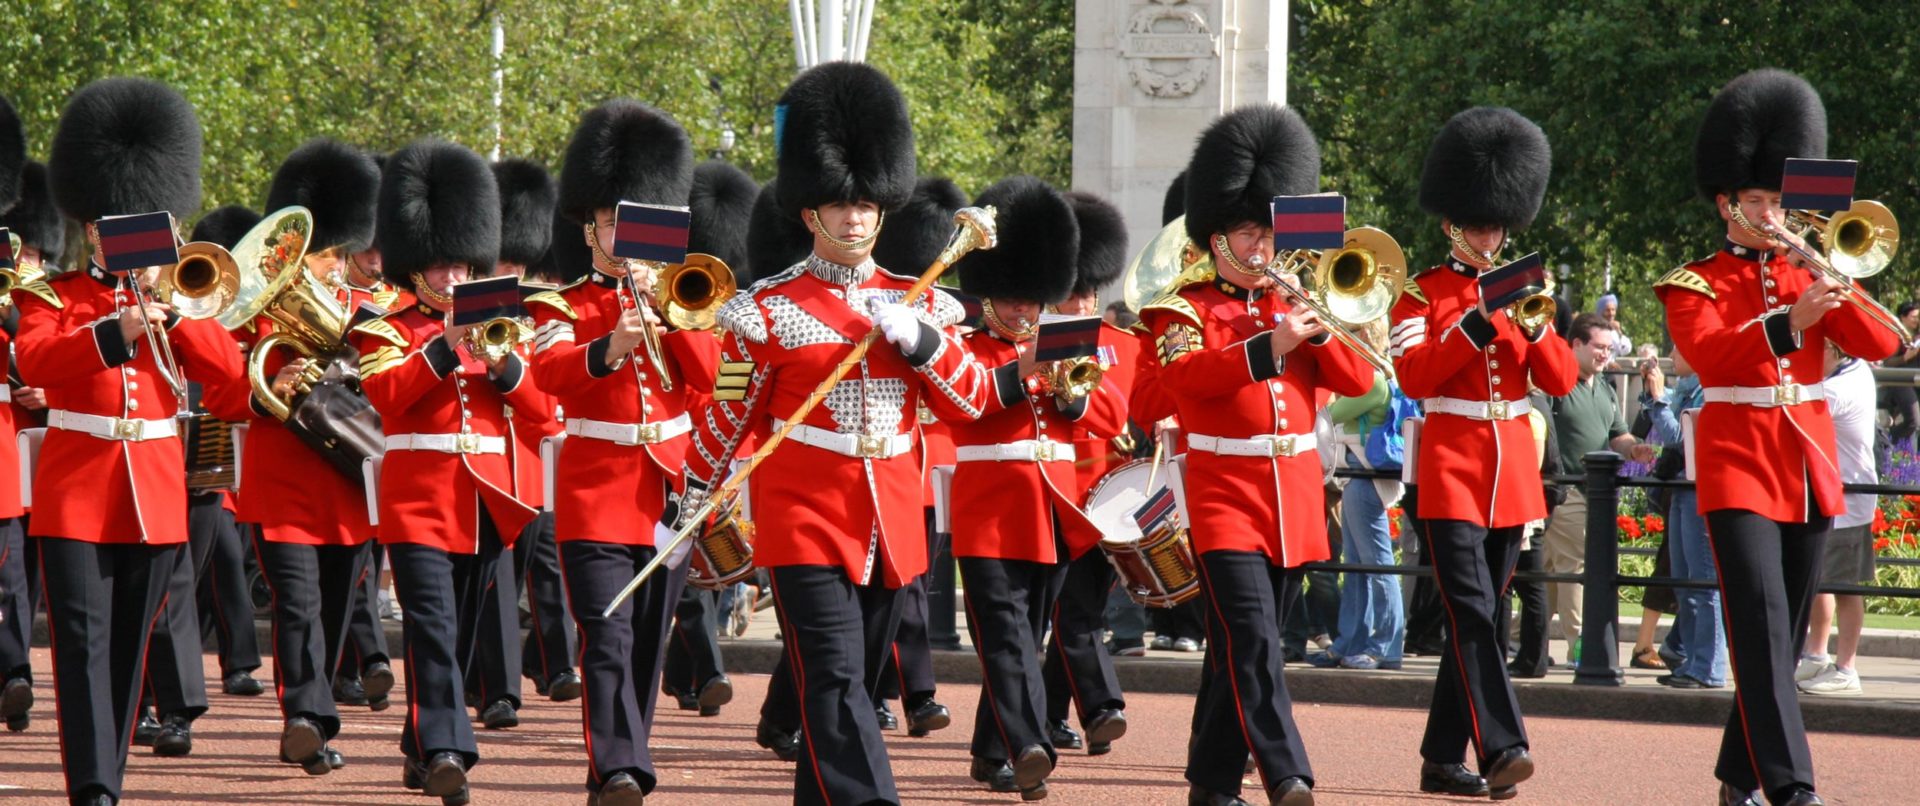 royal-london-haf-day-family-tour-guards